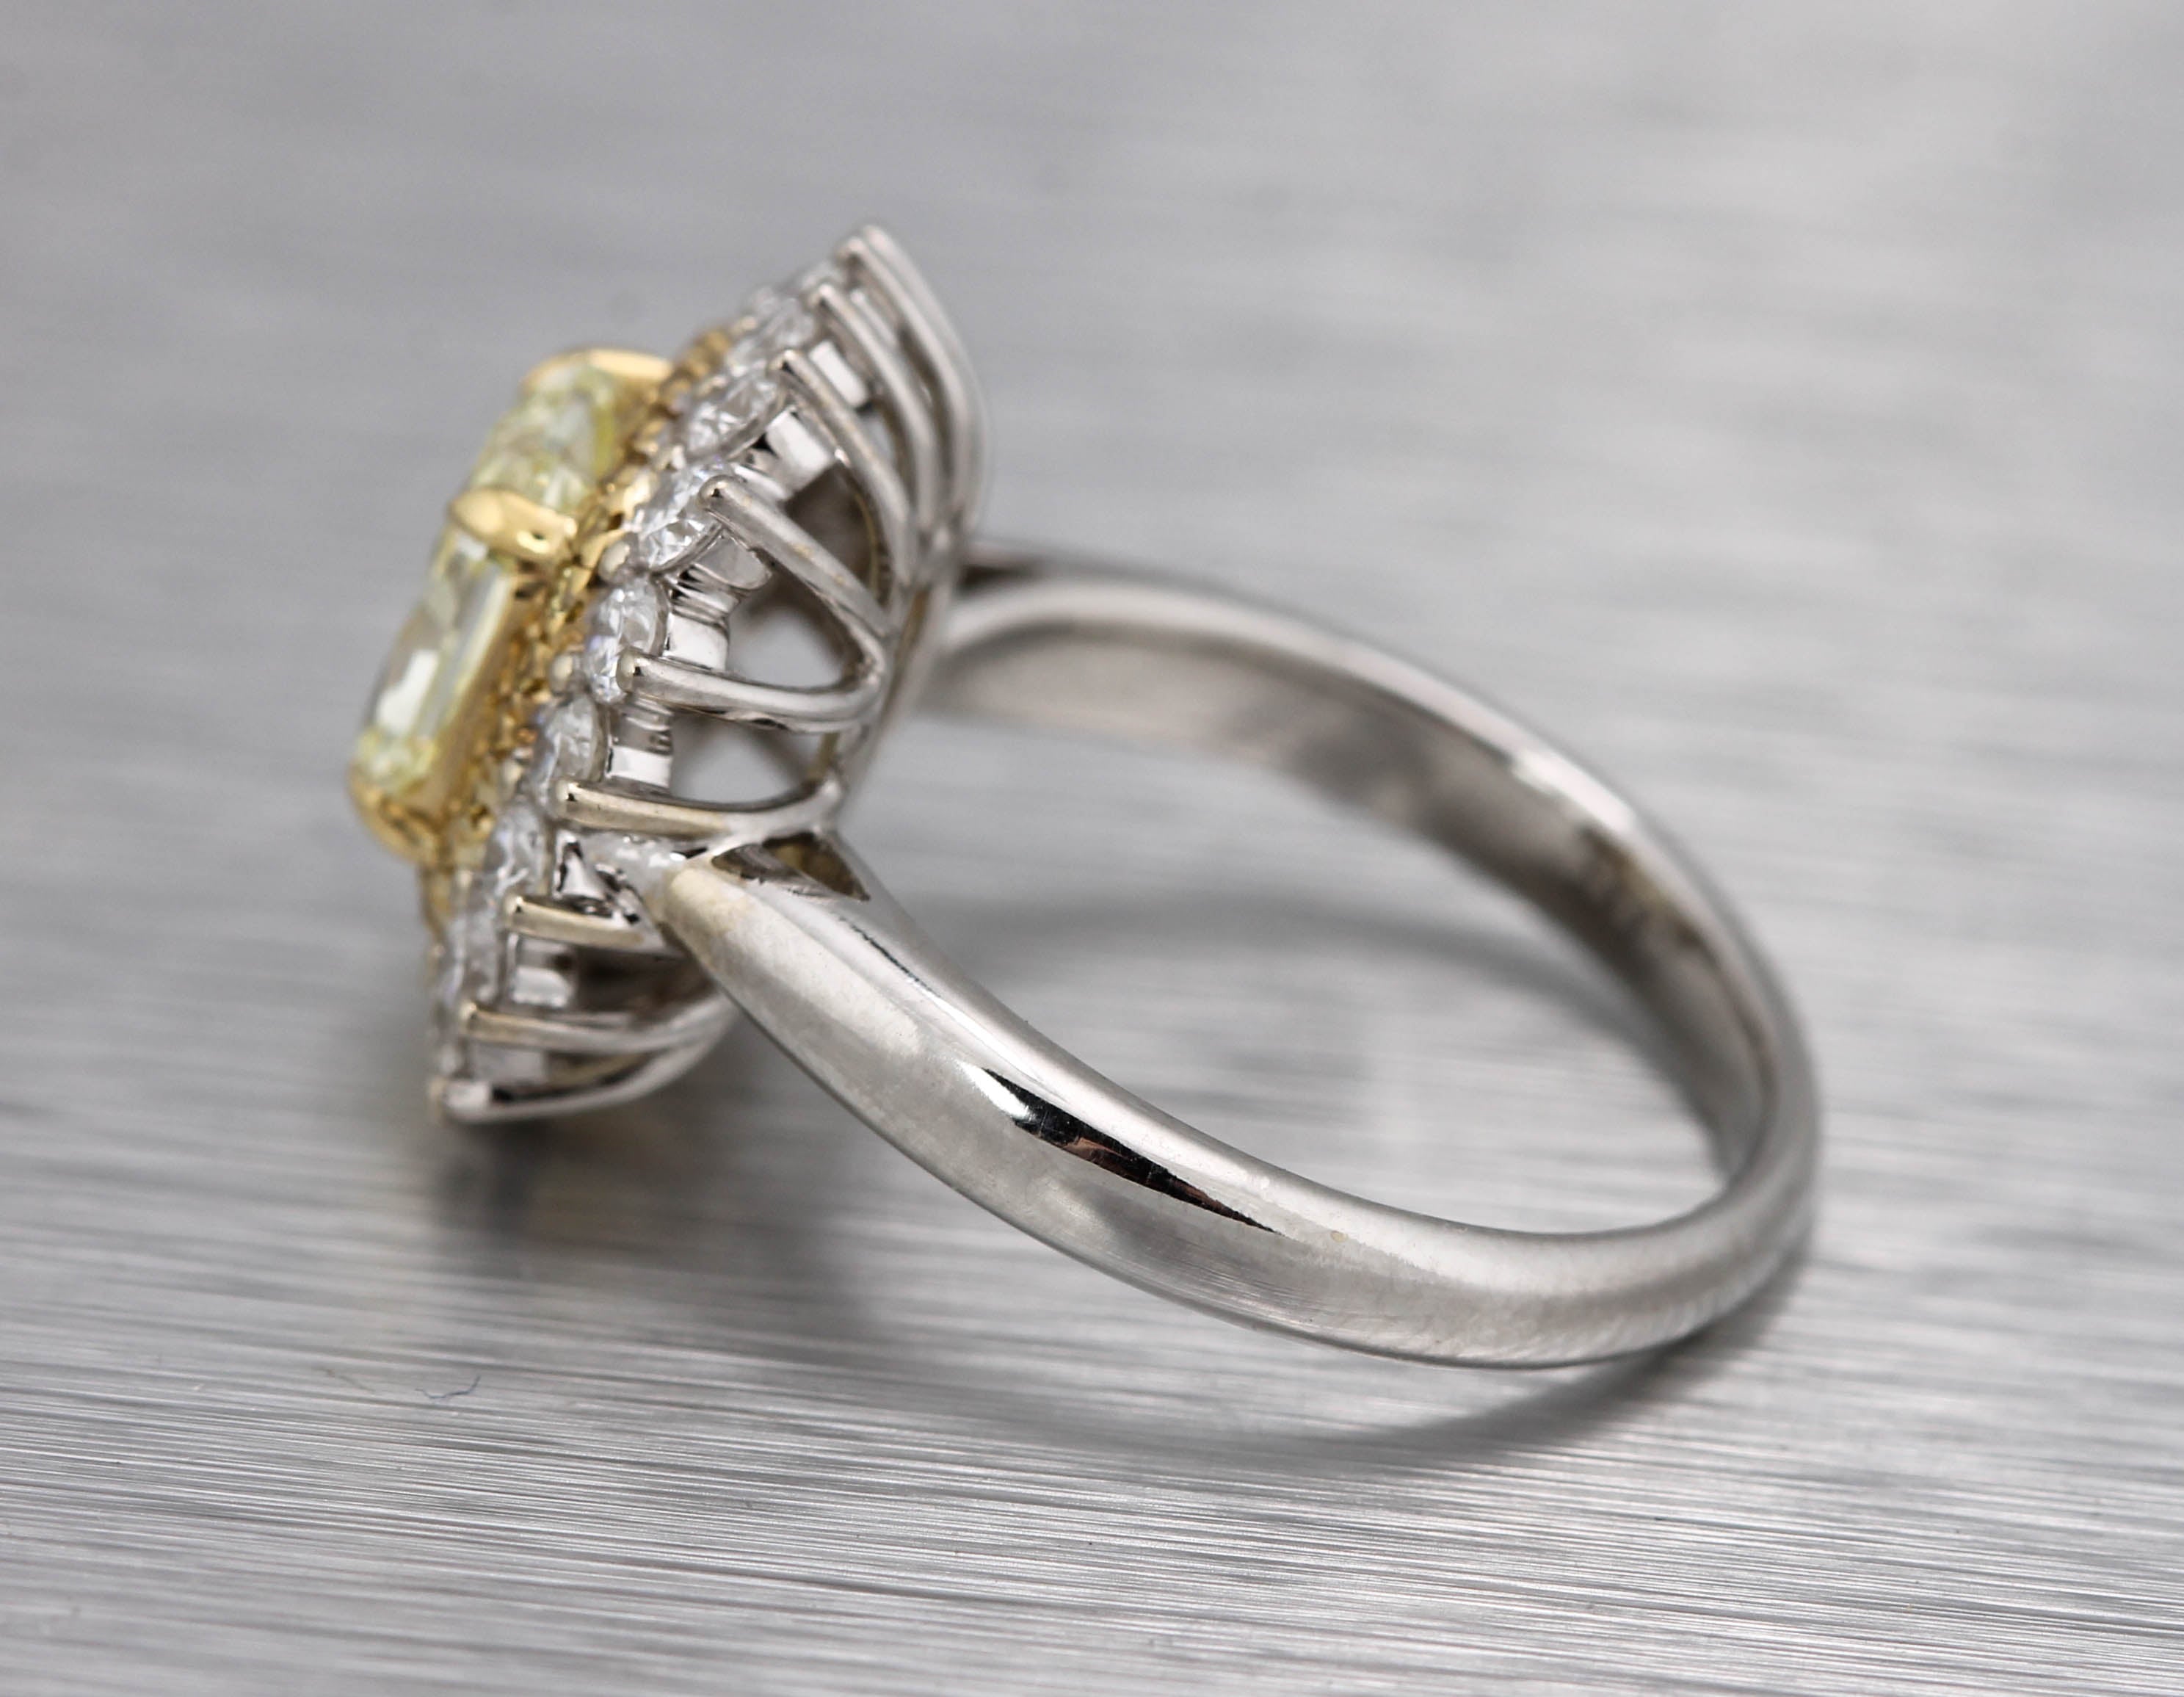 Stunning Ladies Estate 18K White Yellow Gold 2.26ctw Diamond Cockail Ring EGL